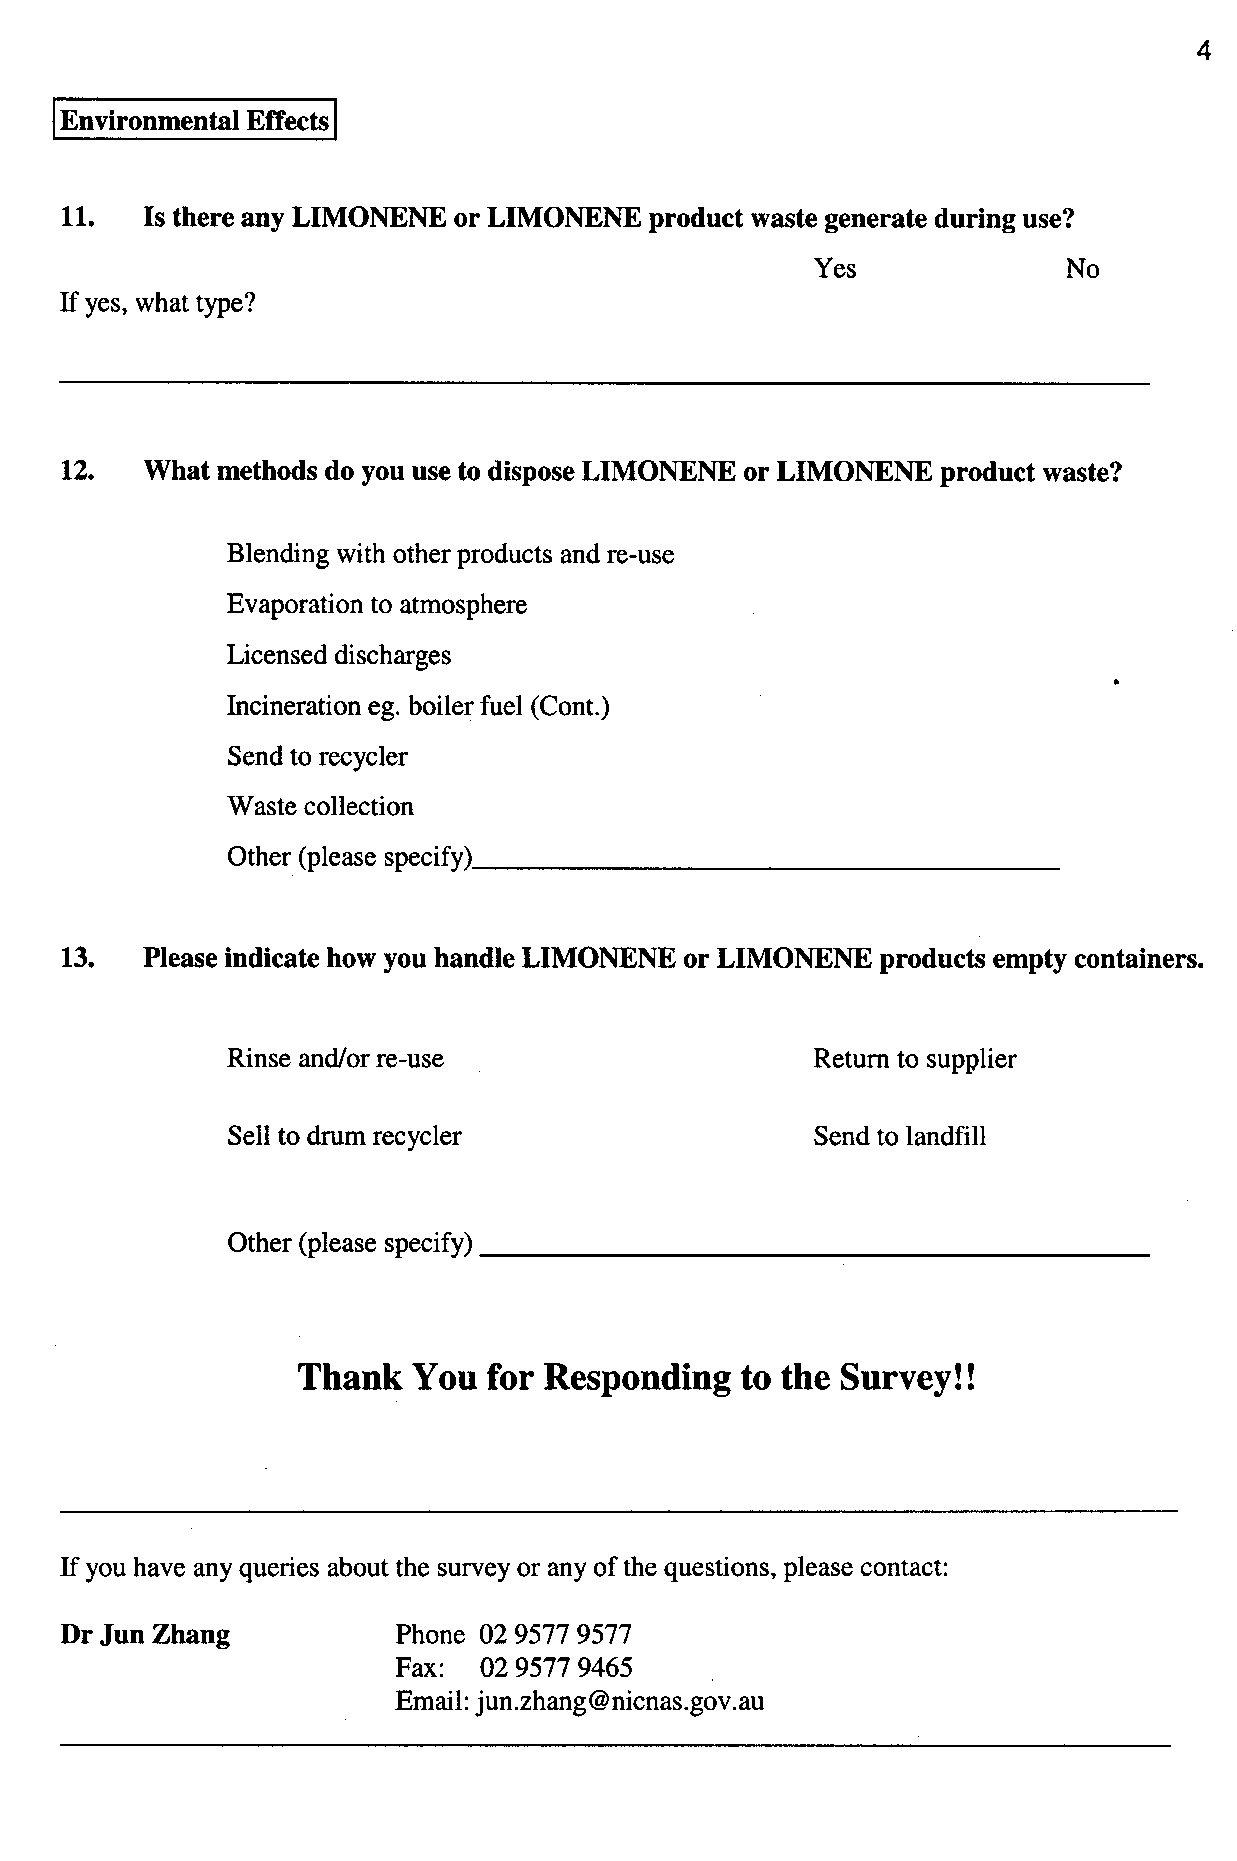 13th page survey